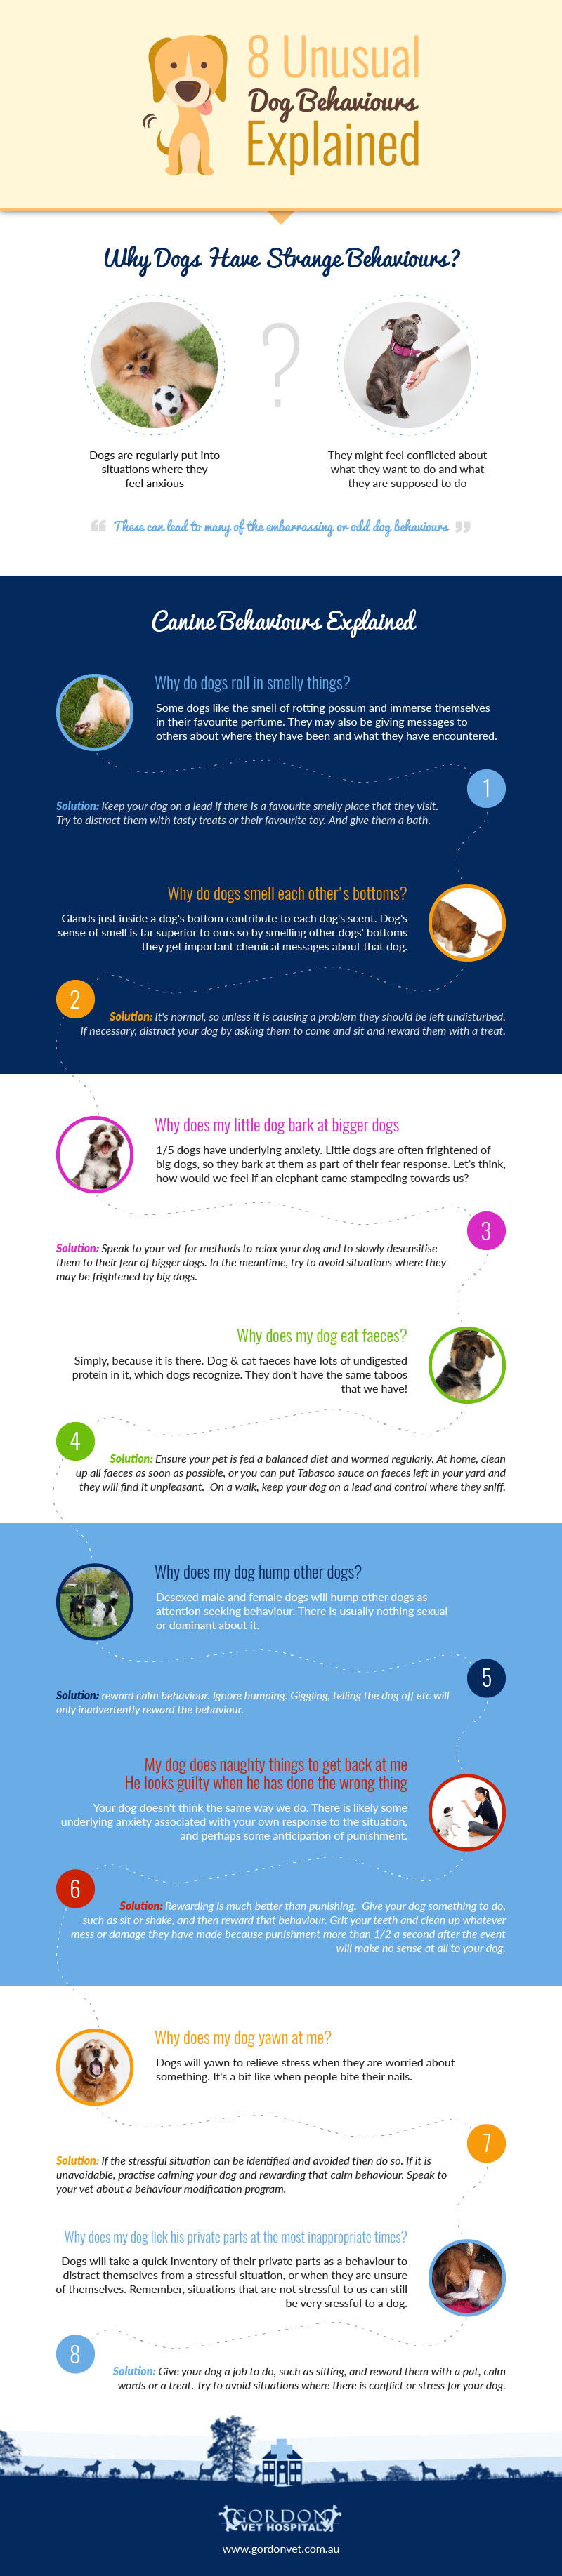 8-unusual-behaviors-infographic